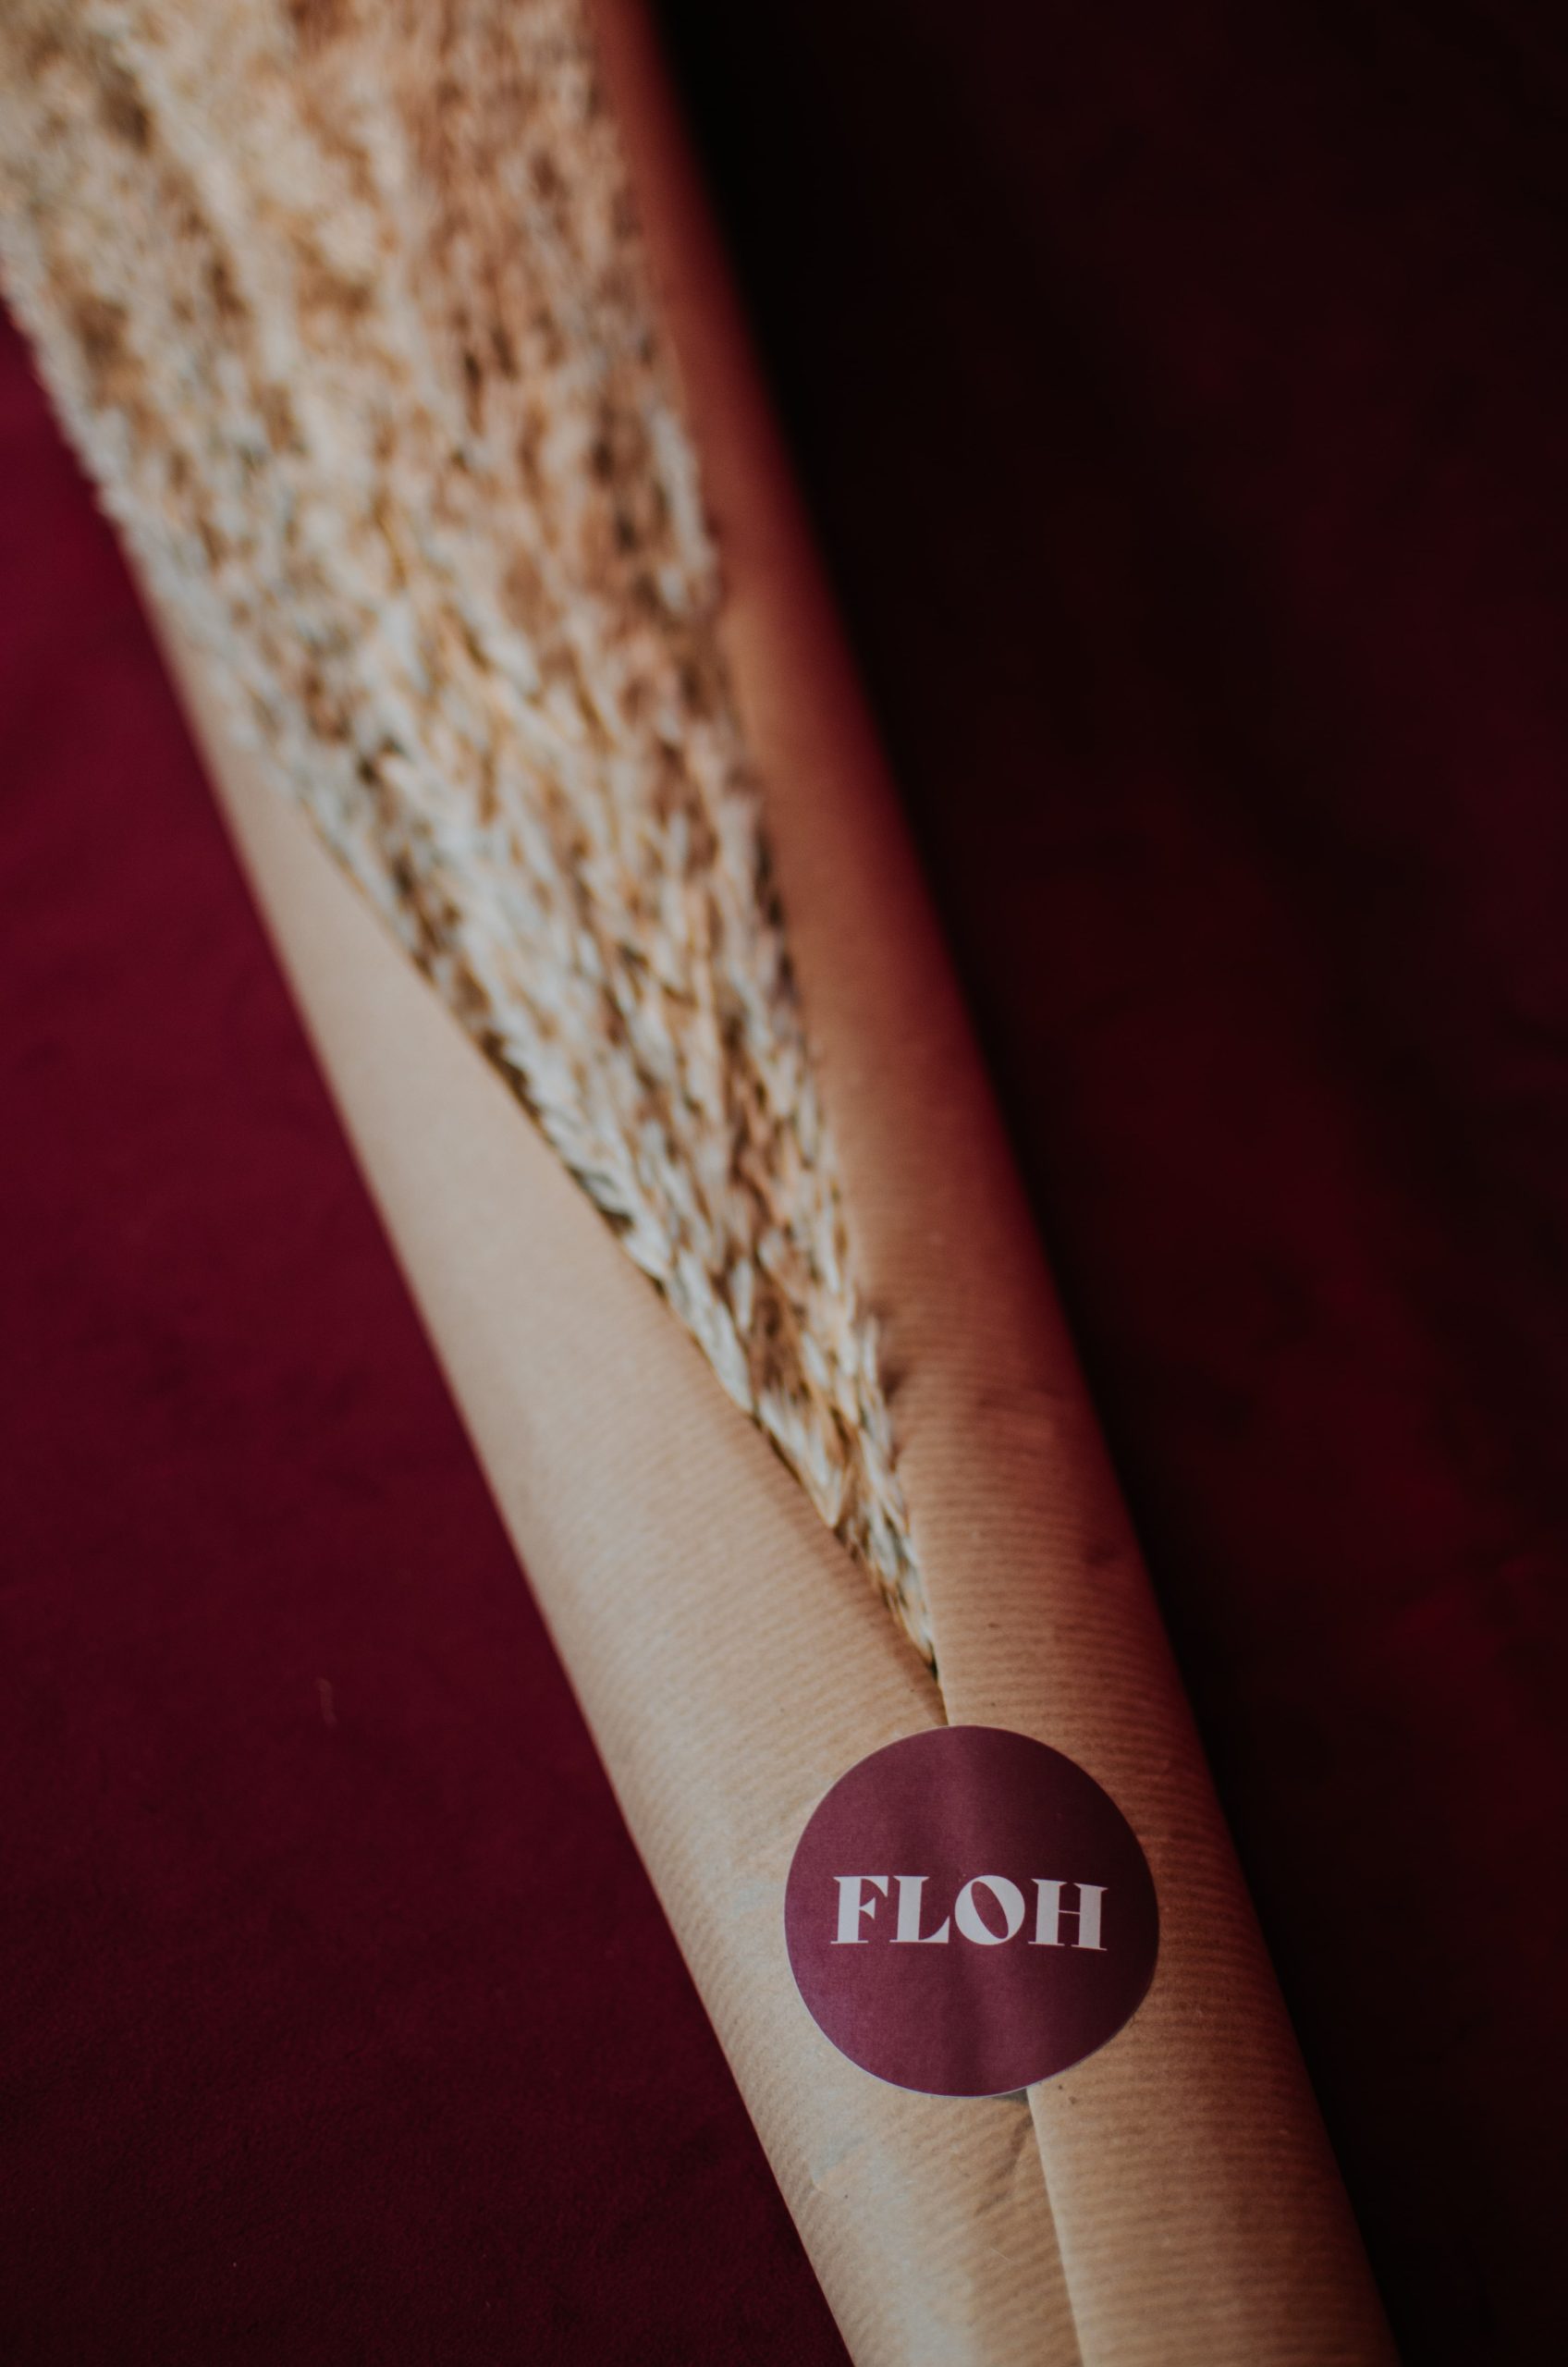 floh dried flower